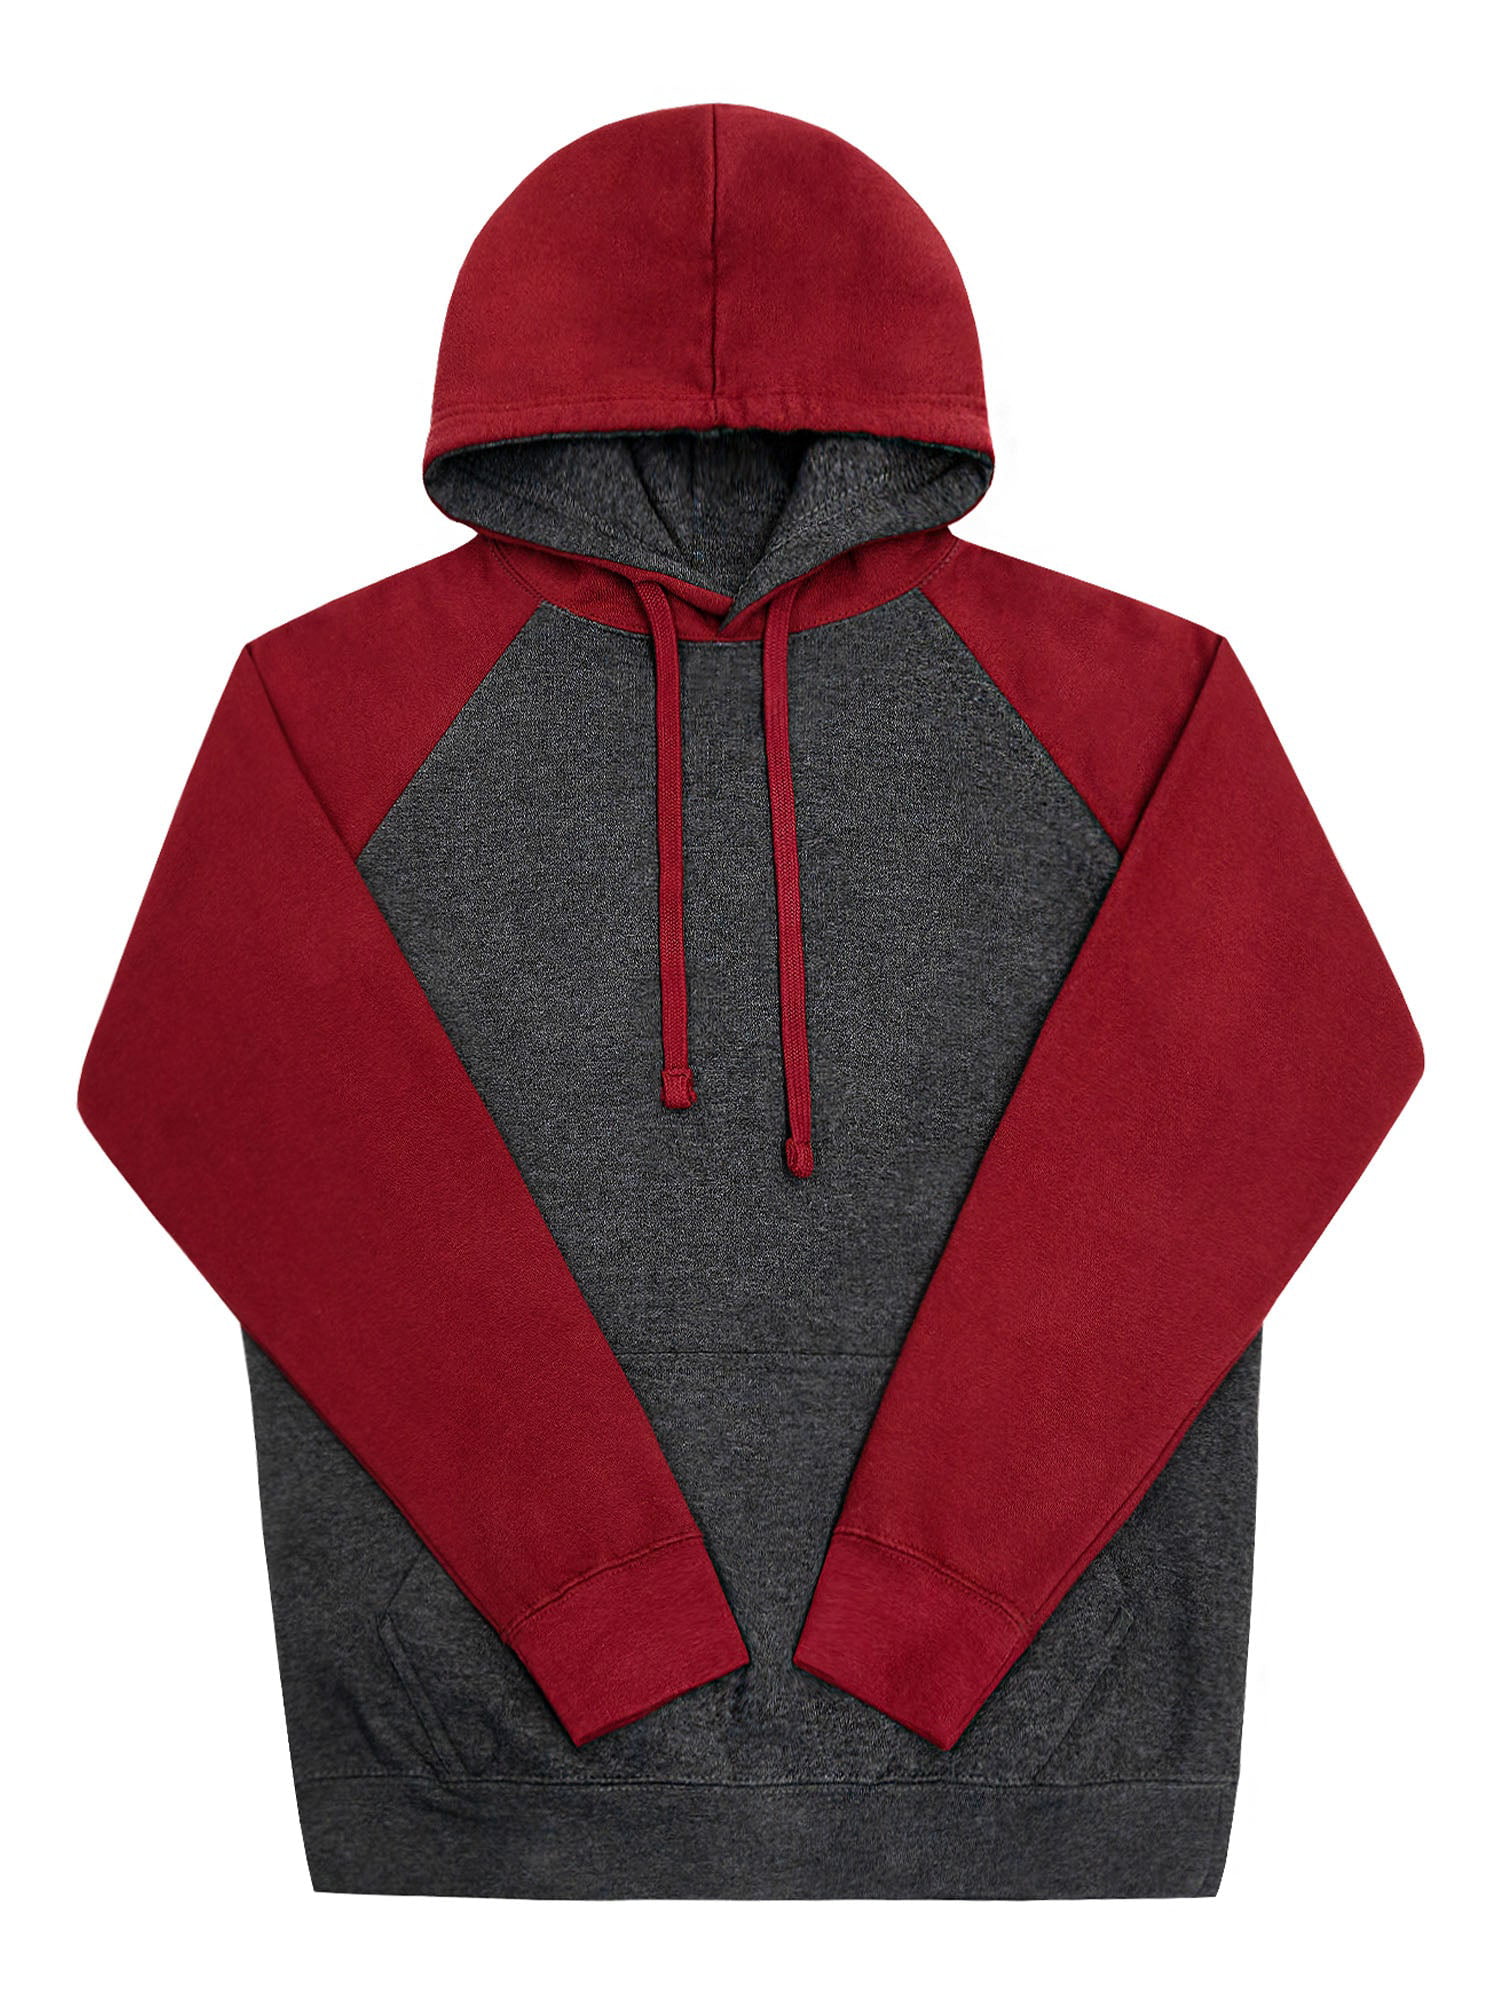 G-Style USA Men's Heavyweight Contrast Raglan Sleeve Fleece Pullover Hoodie  Sweatshirt MH13112 - Black/Red - Small 